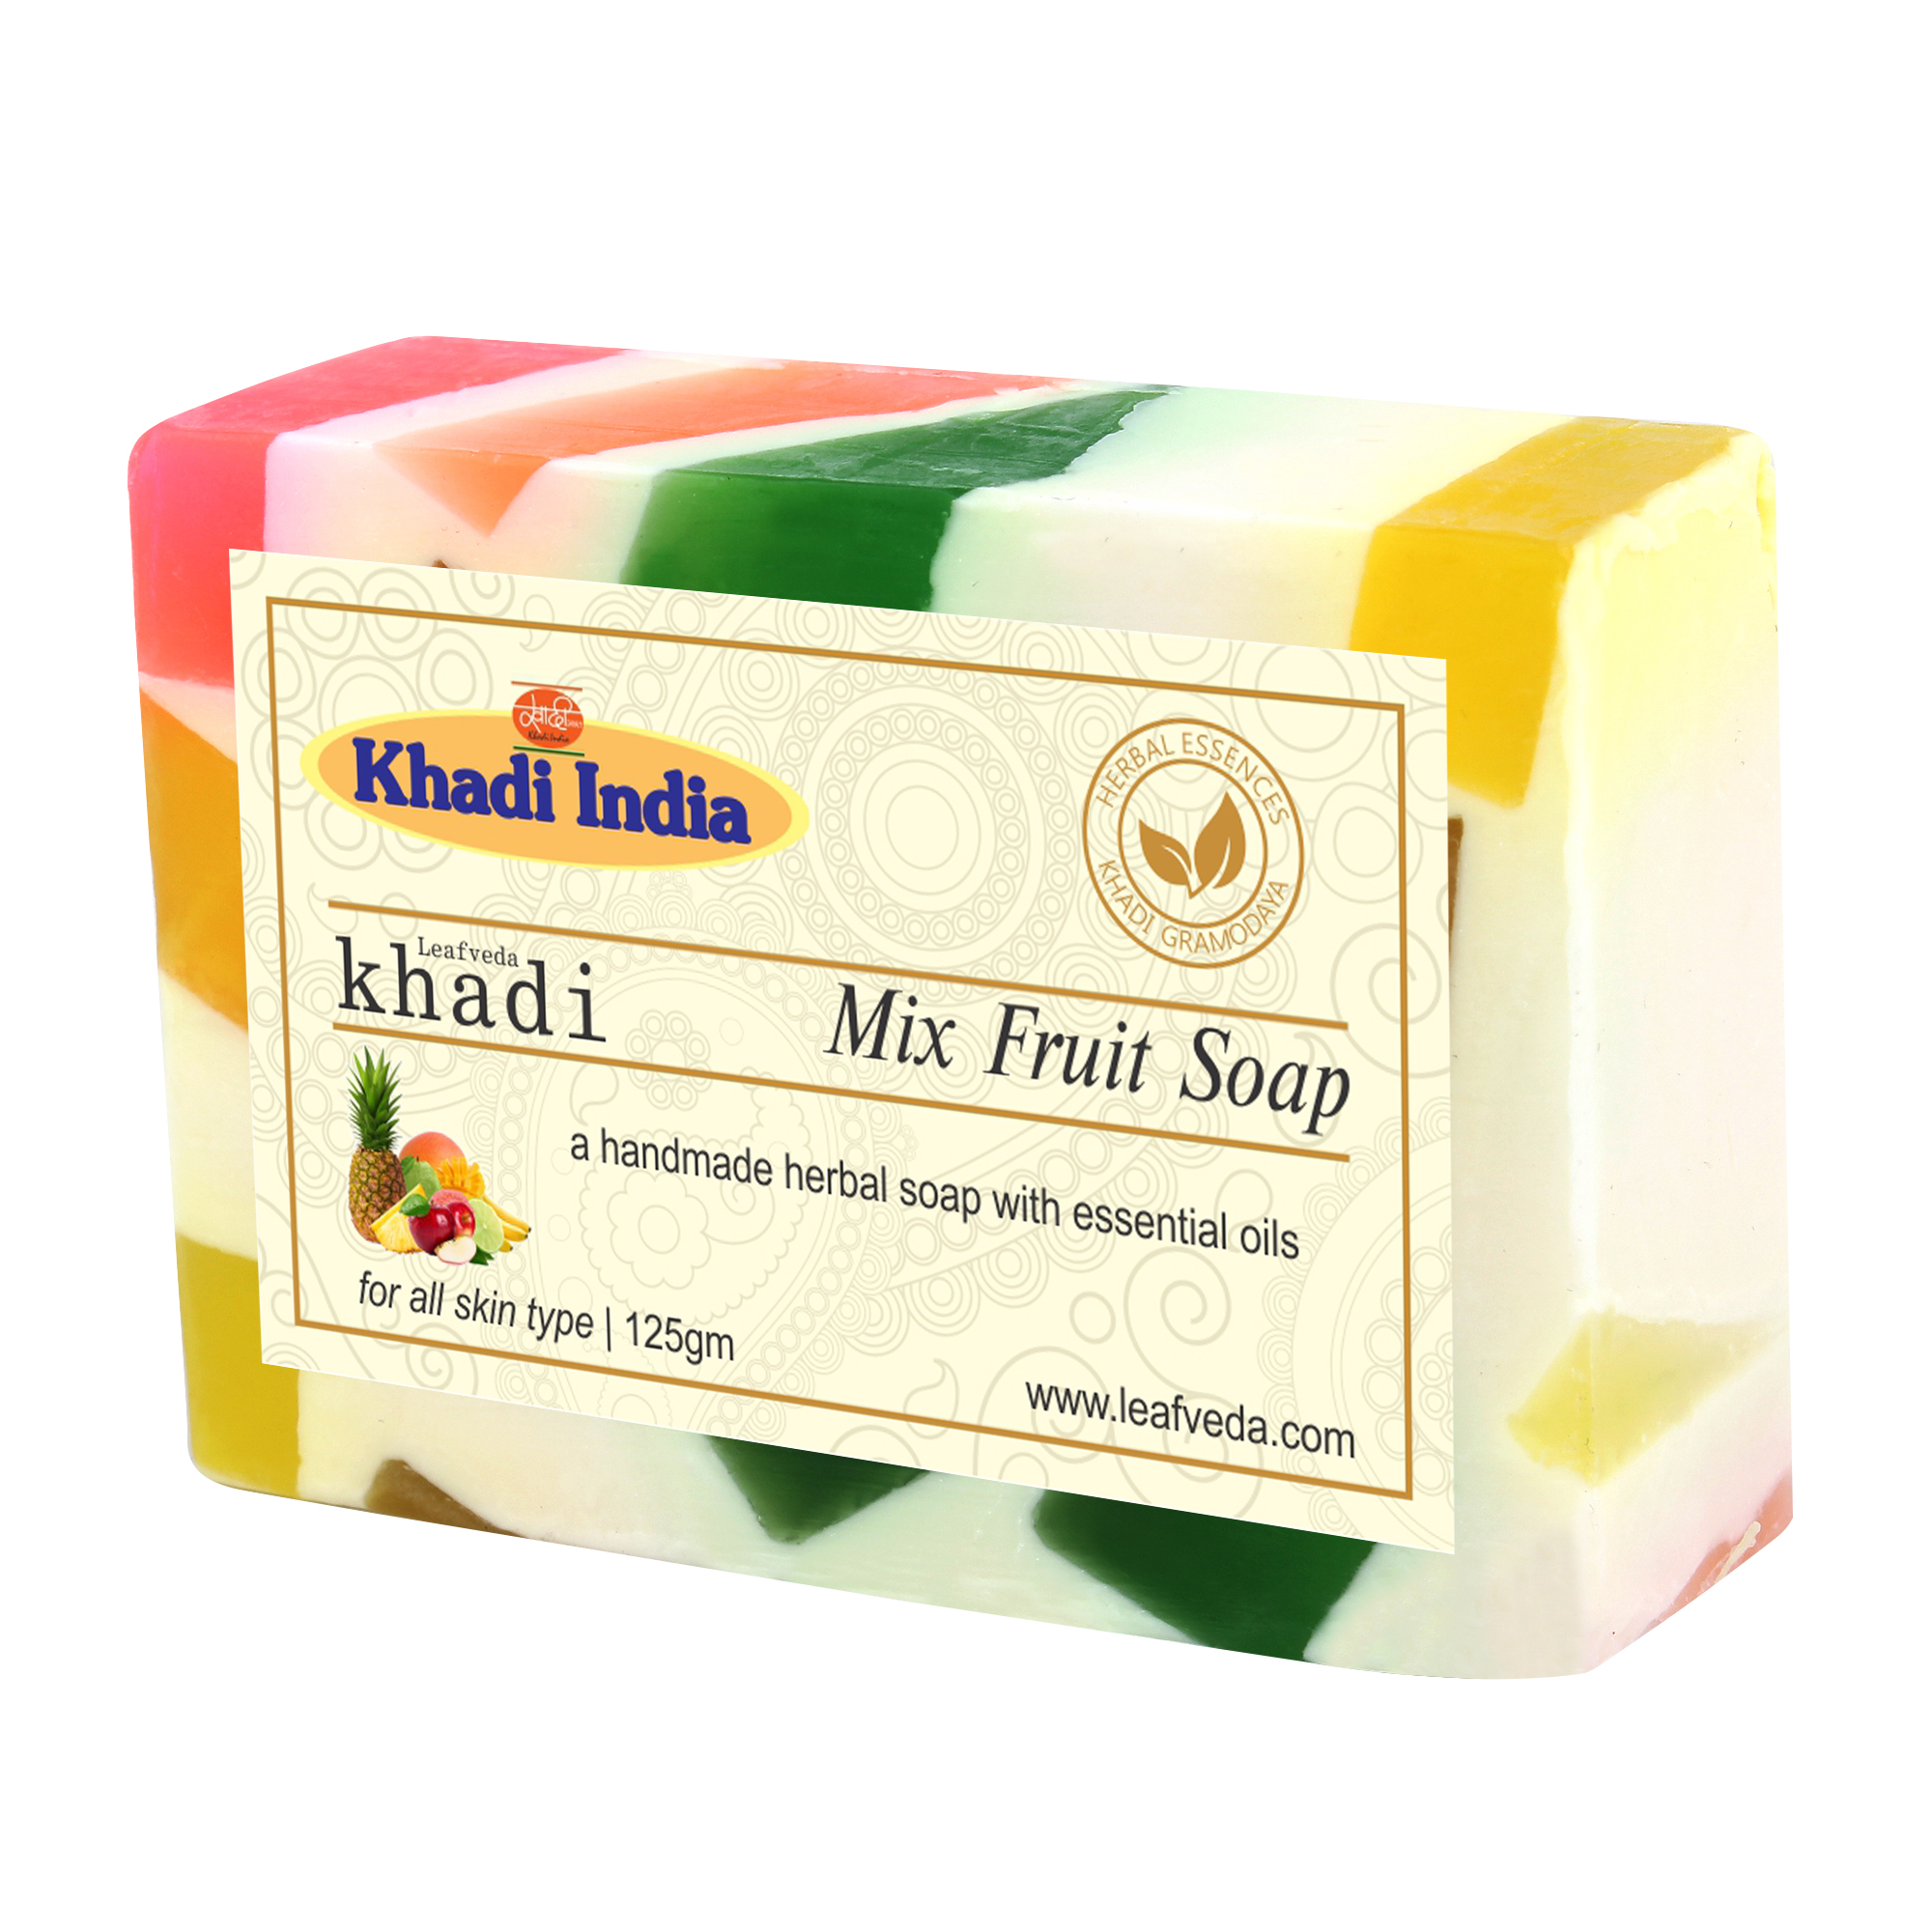 Buy Khadi Leafveda Mix Fruit Soap at Best Price Online